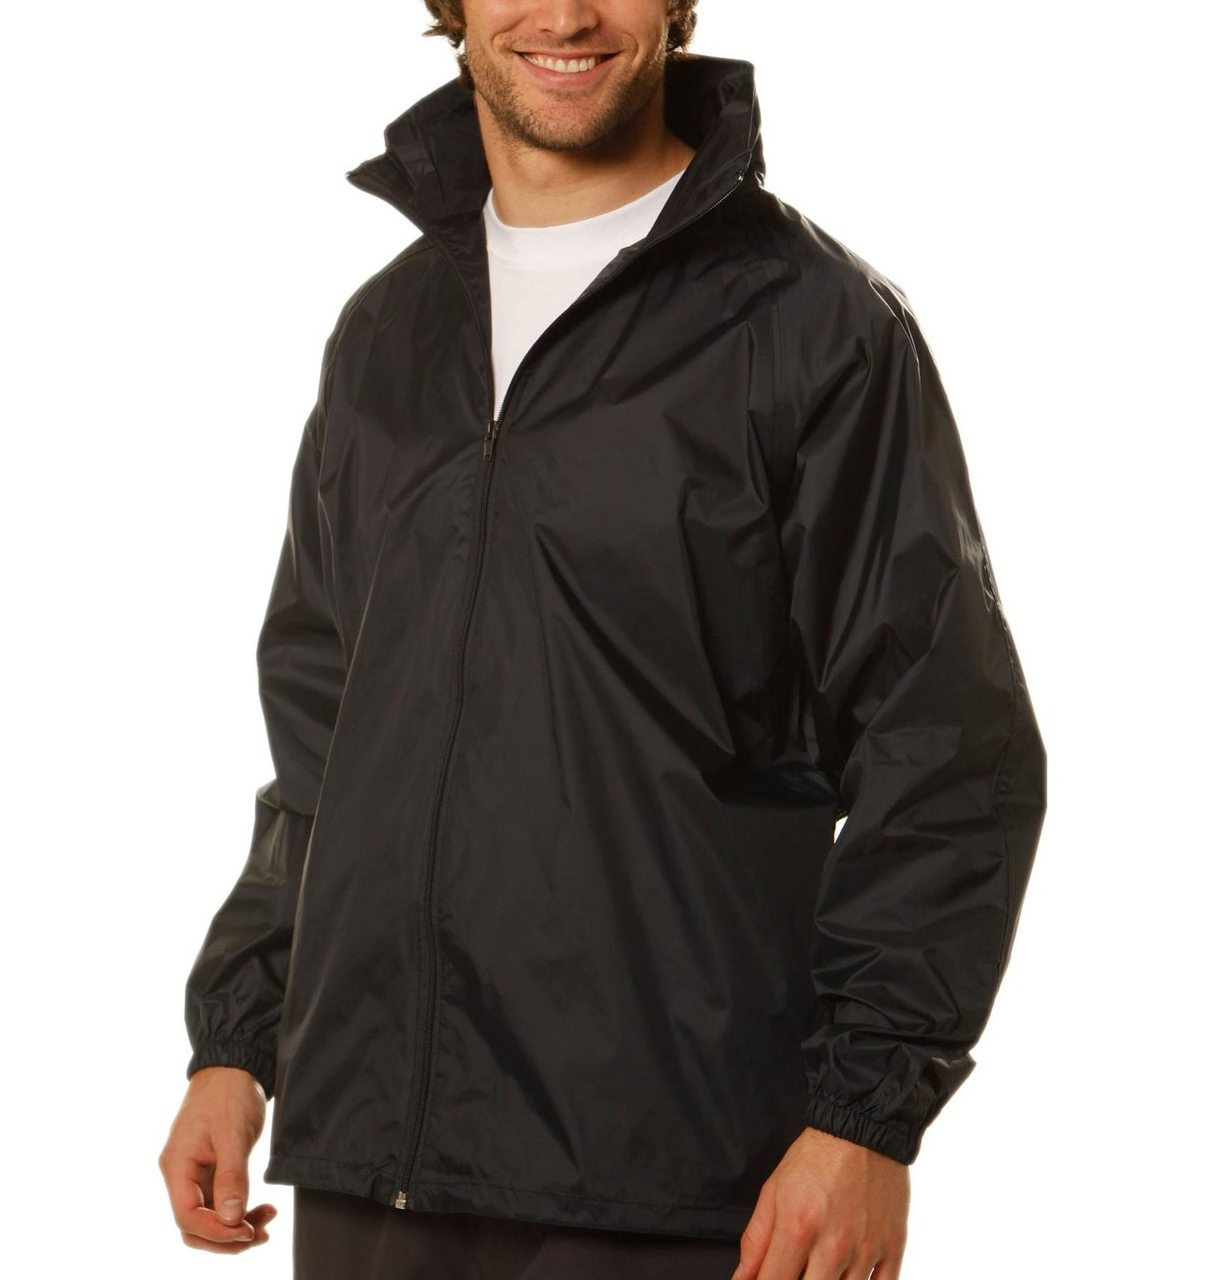 travel foldaway rain jackets with hood | wholesale plain weather jacket ...